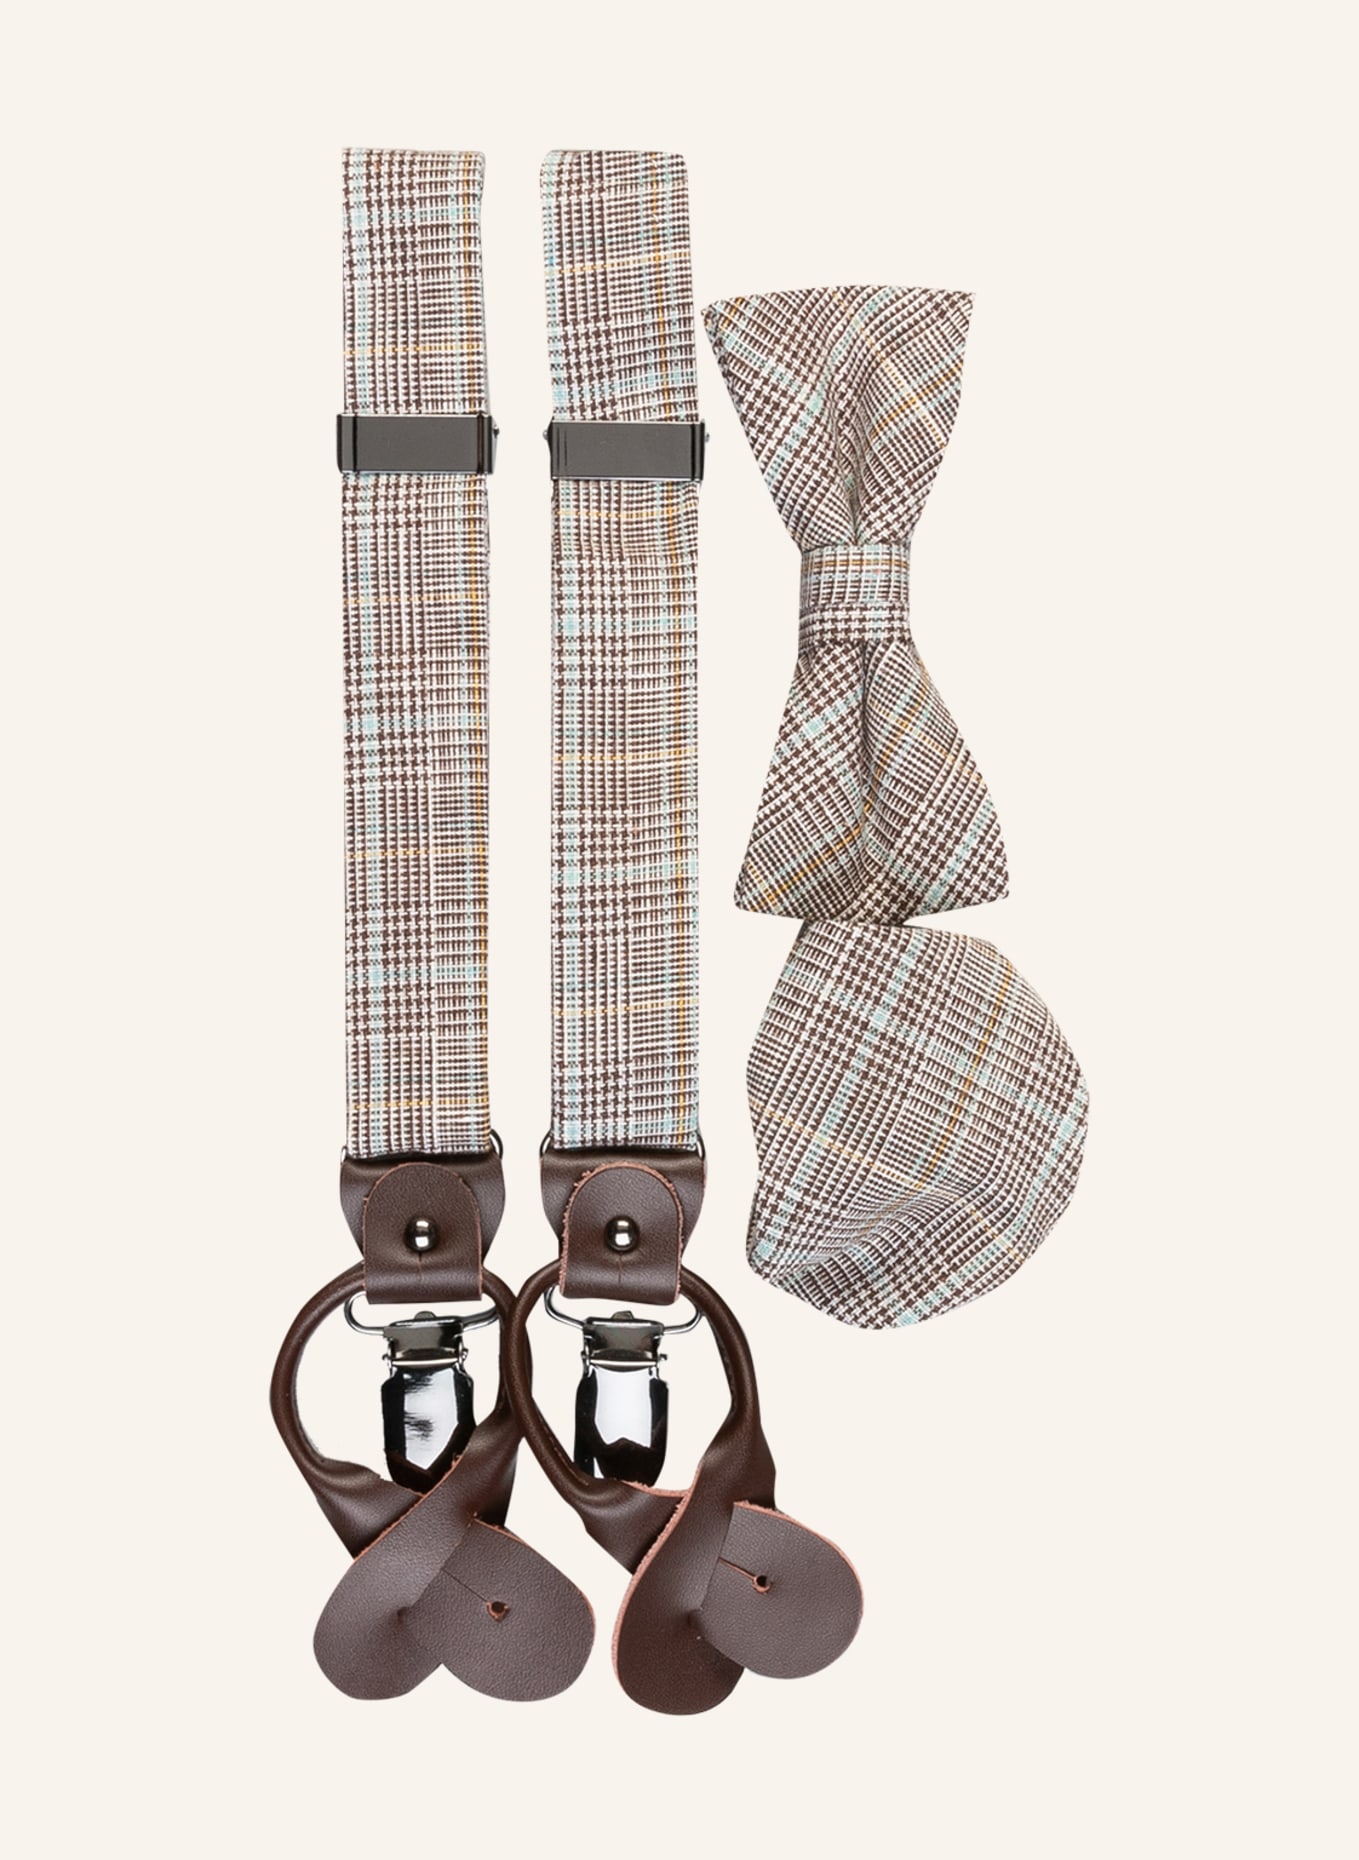 dark MONTI Suspenders, brown/ Set and in pocket mint bow tie handkerchief SANDRO: white/